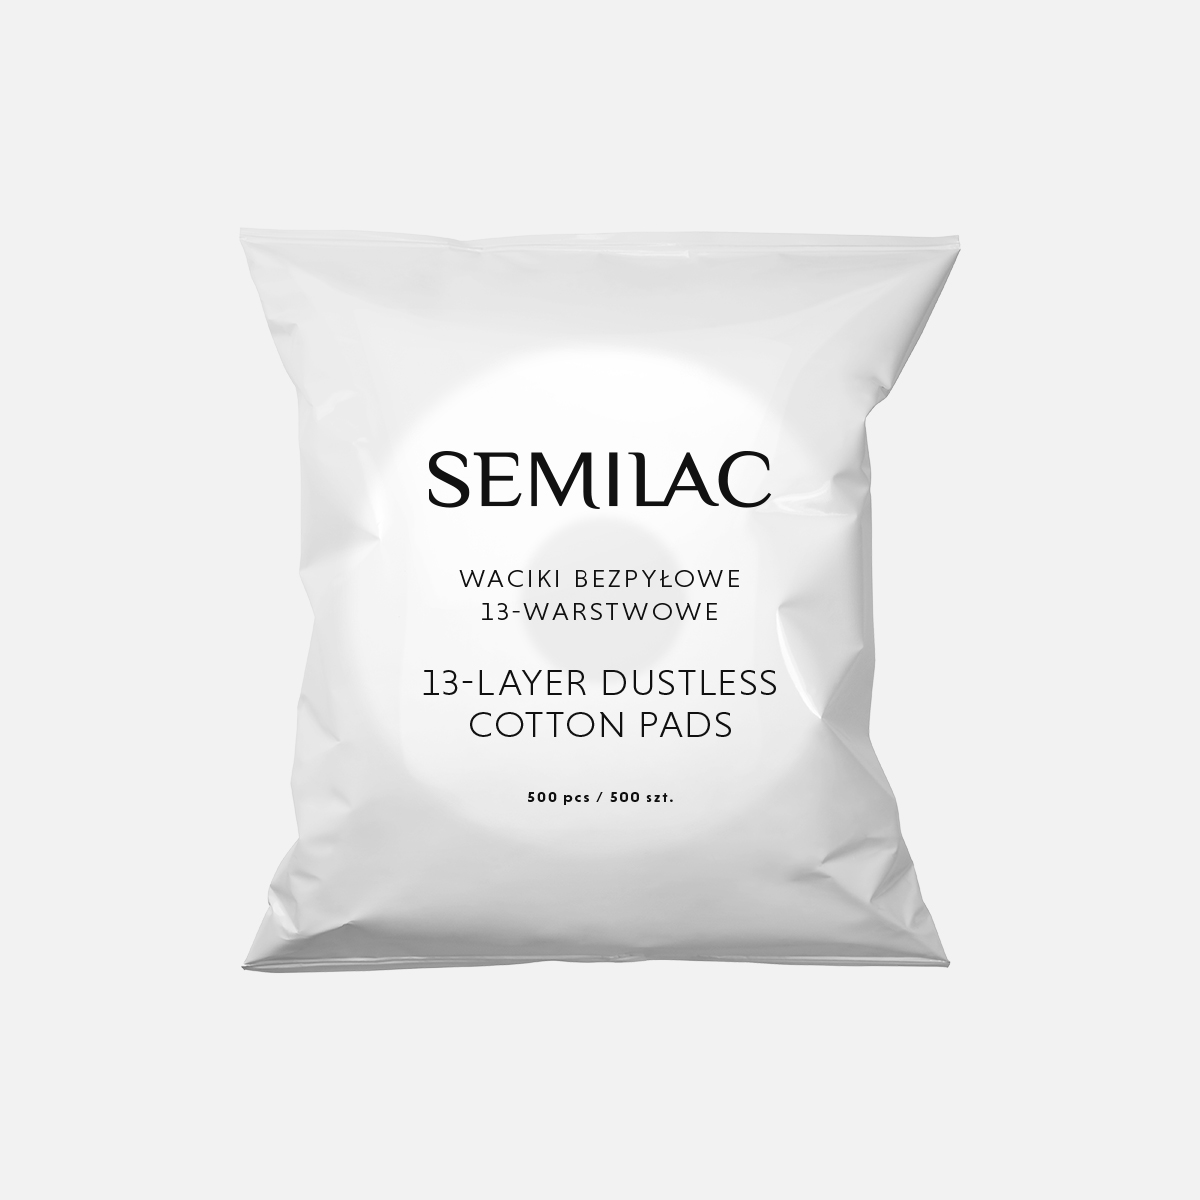 Semilac Cotton Pads Dust Free 500 pieces - Semilac UK